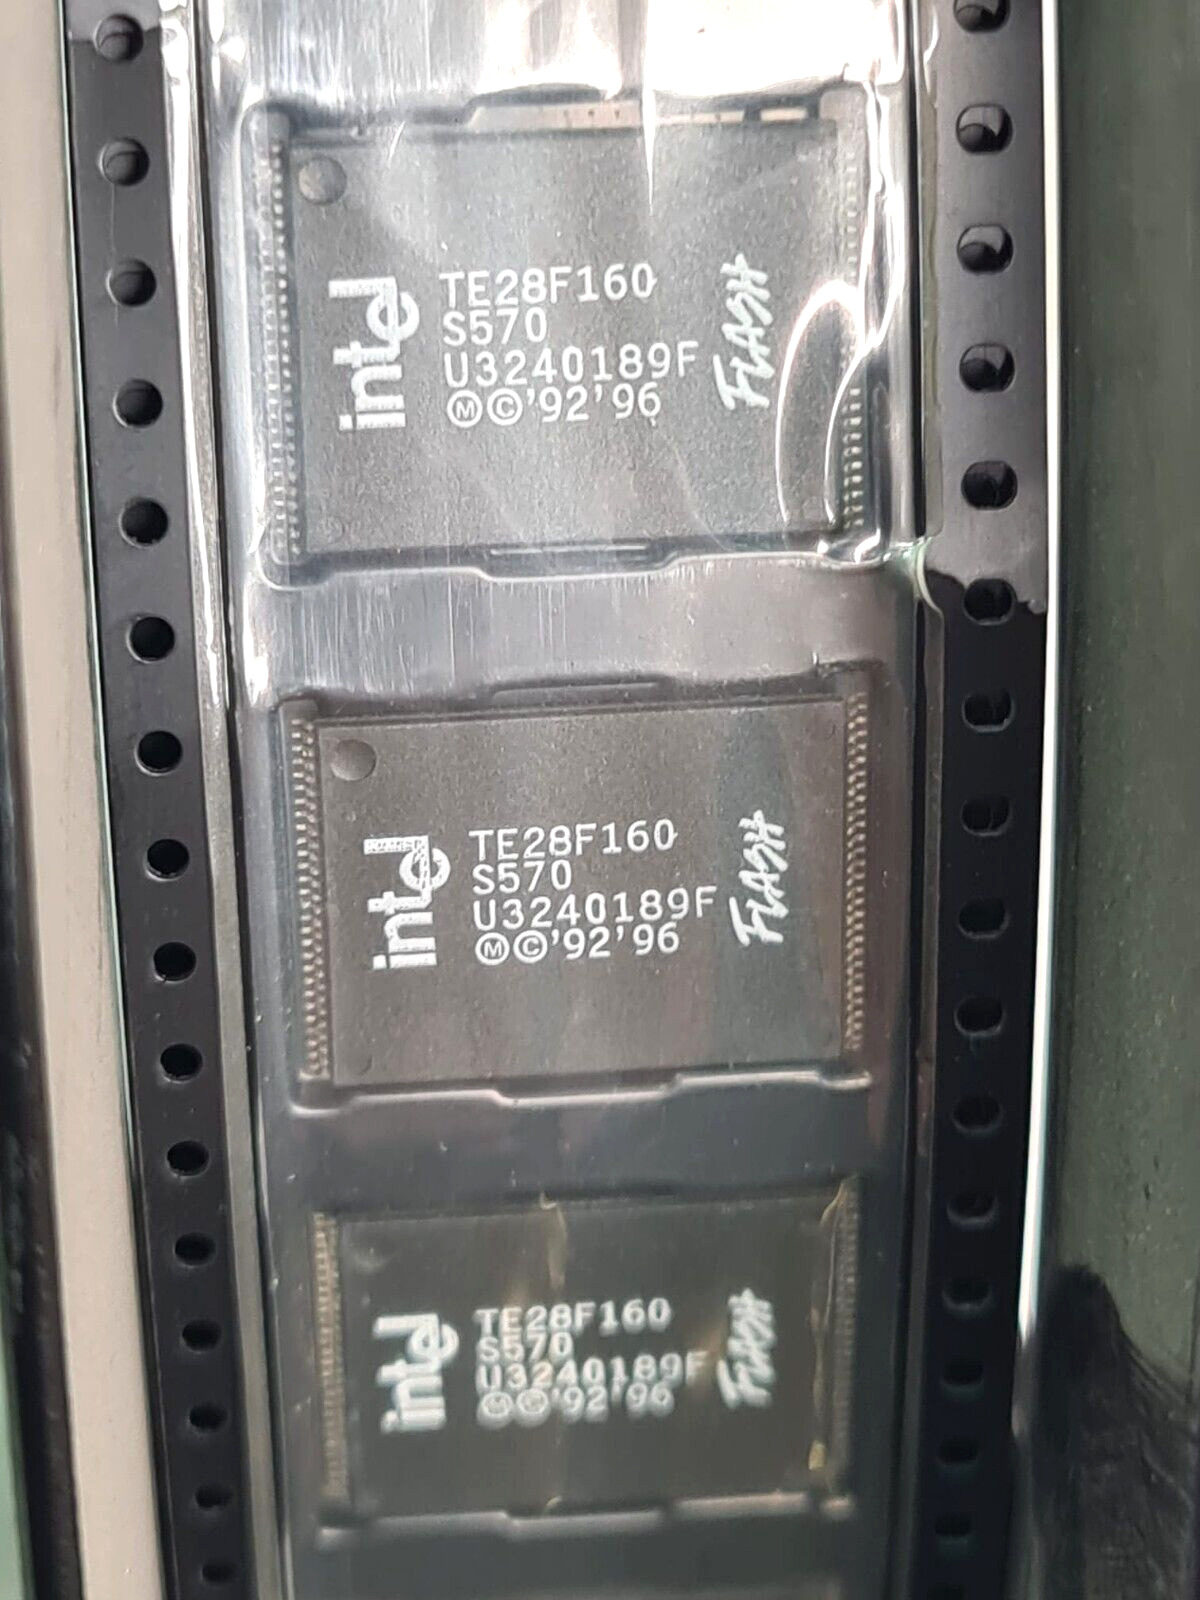 970 Pcs Intel Flash Memory TE28F160 S570 By Dhl Express.